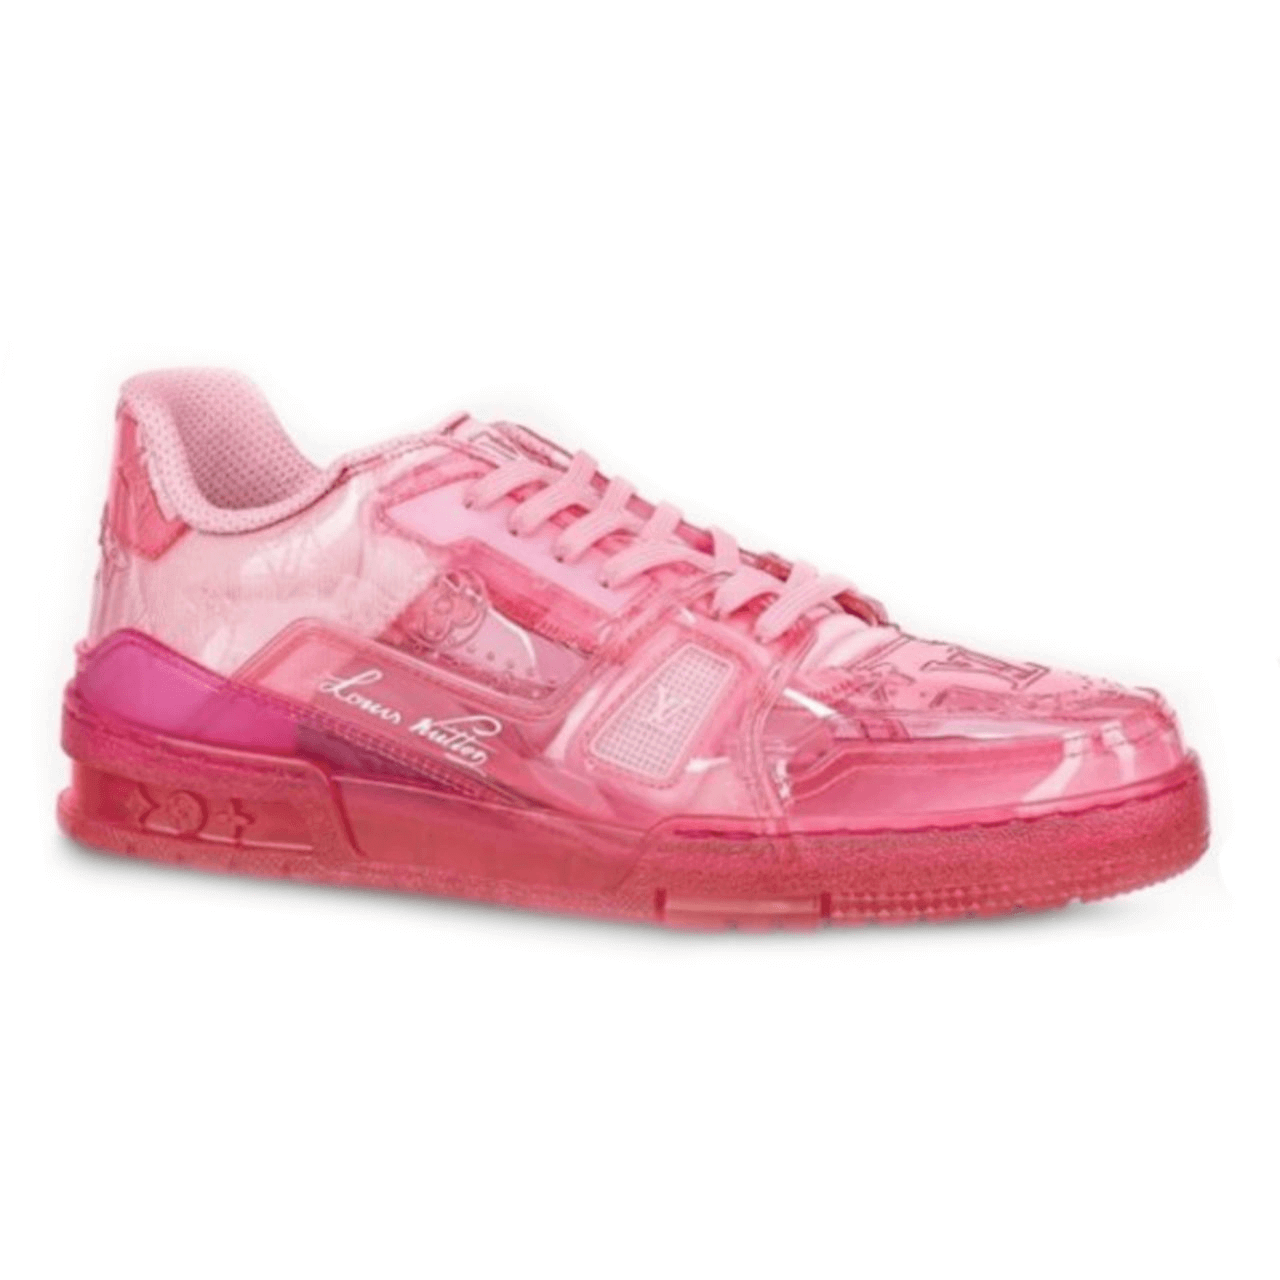 rose louis vuitton trainer sneaker pink